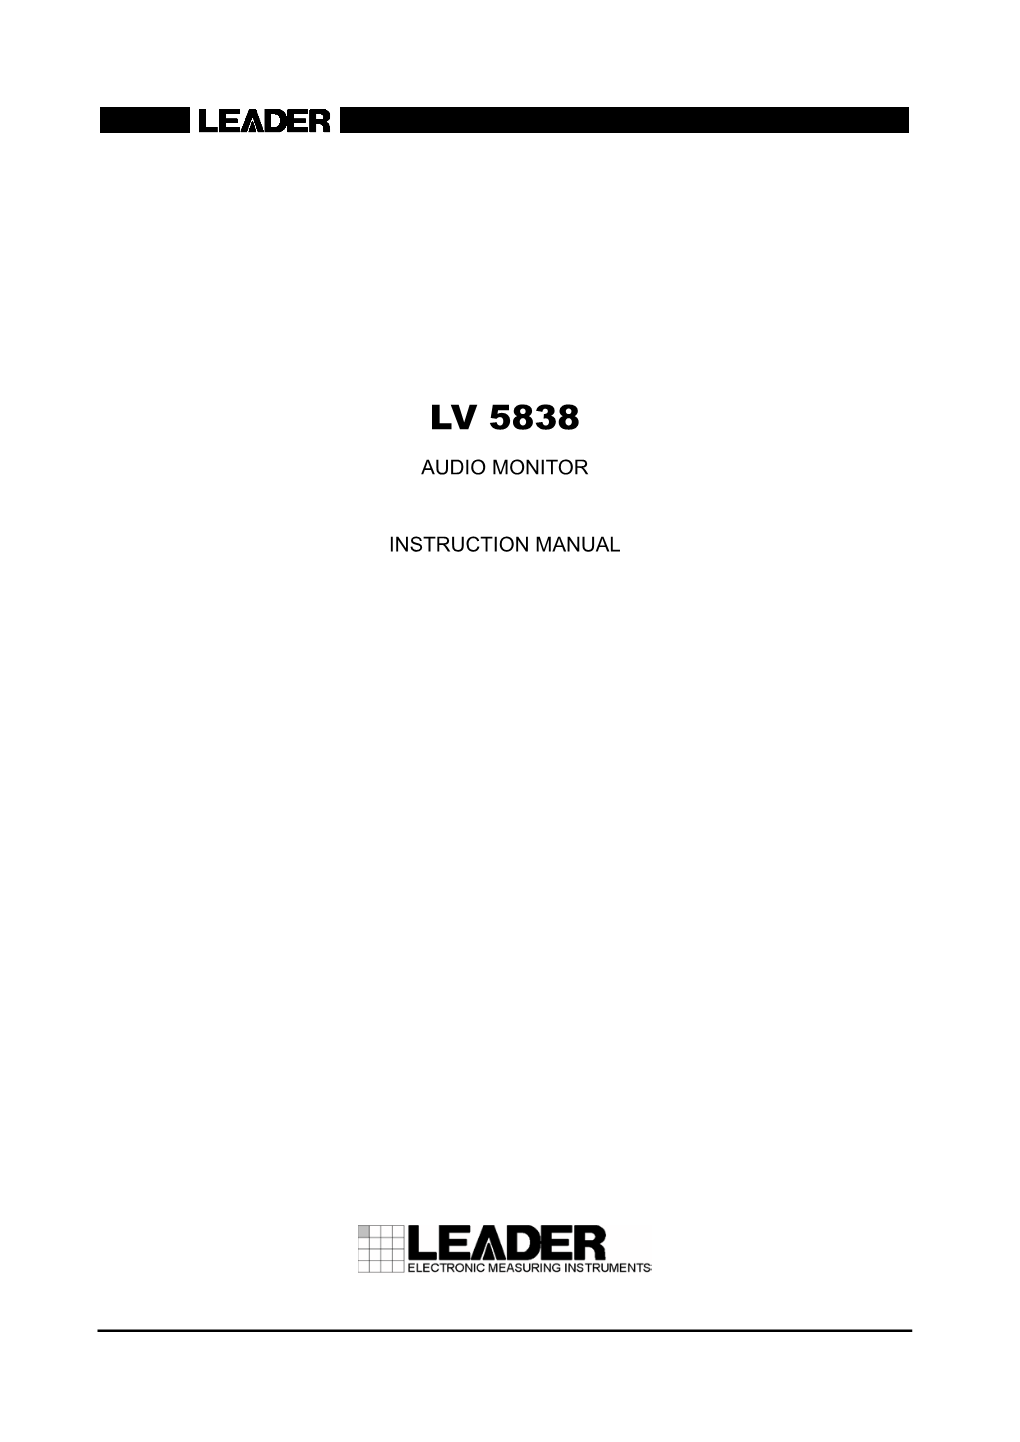 LV 5838 Instruction Manual